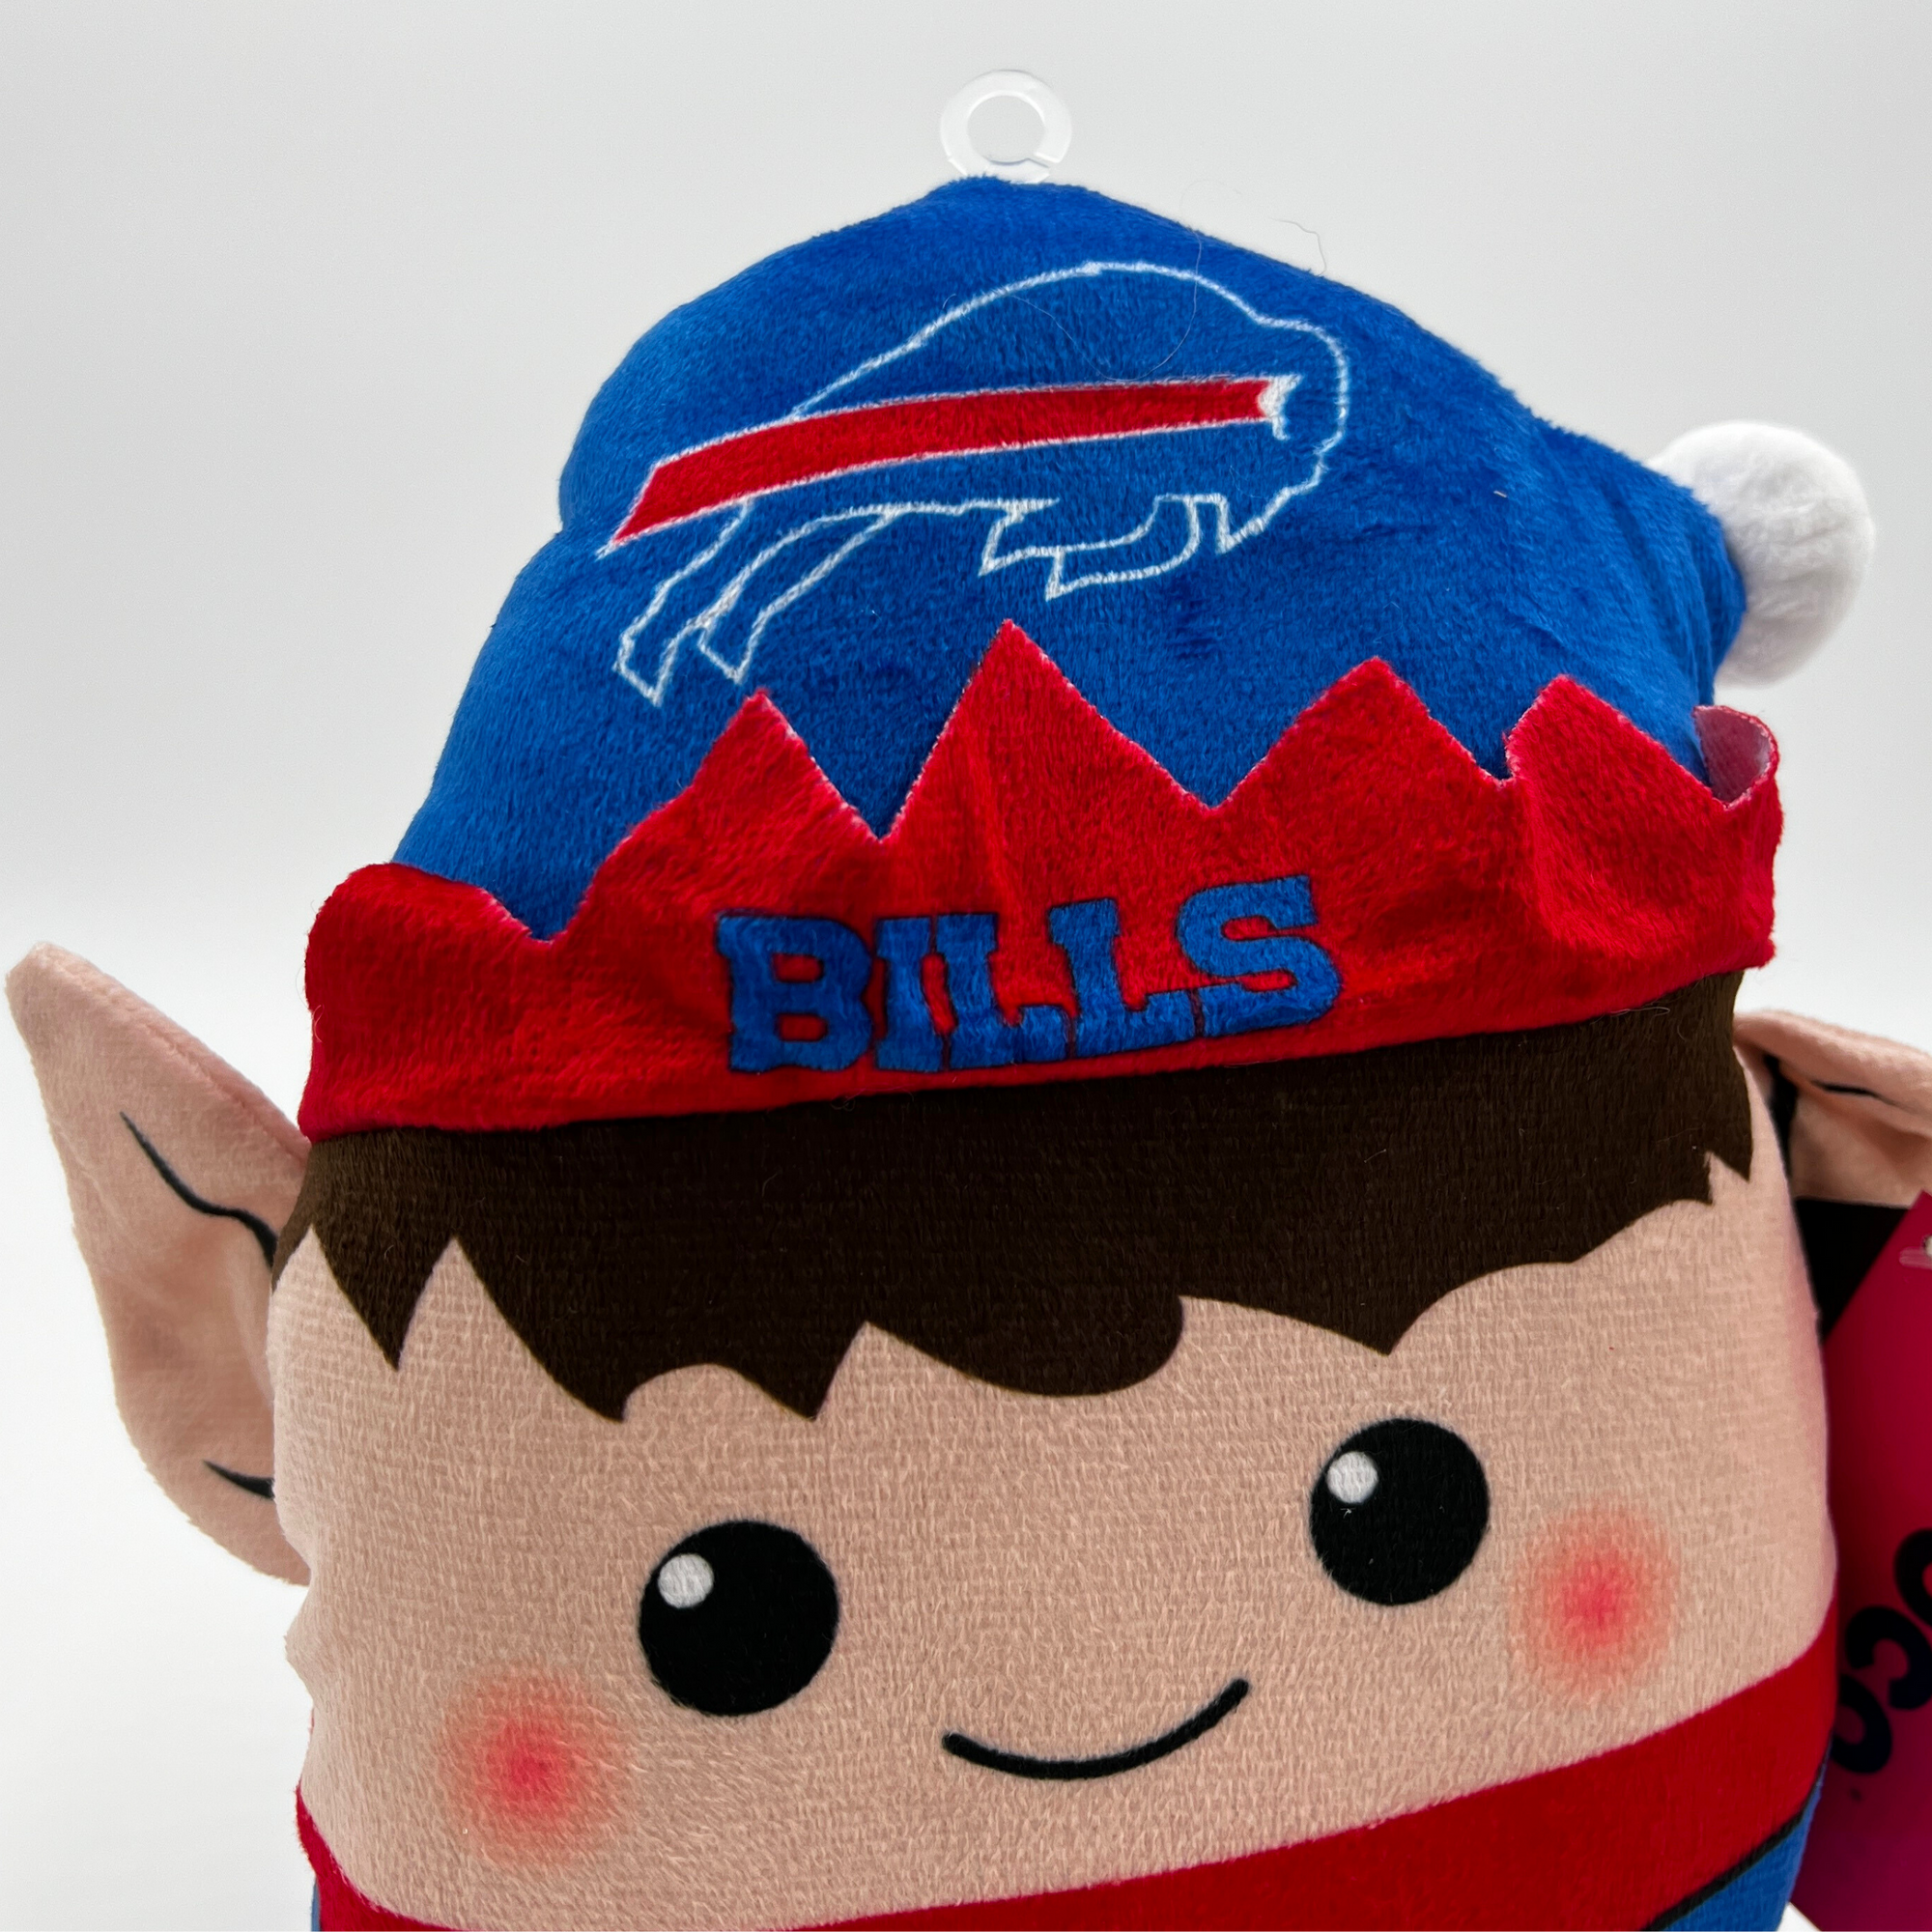 Buffalo Bills Elf Squisher